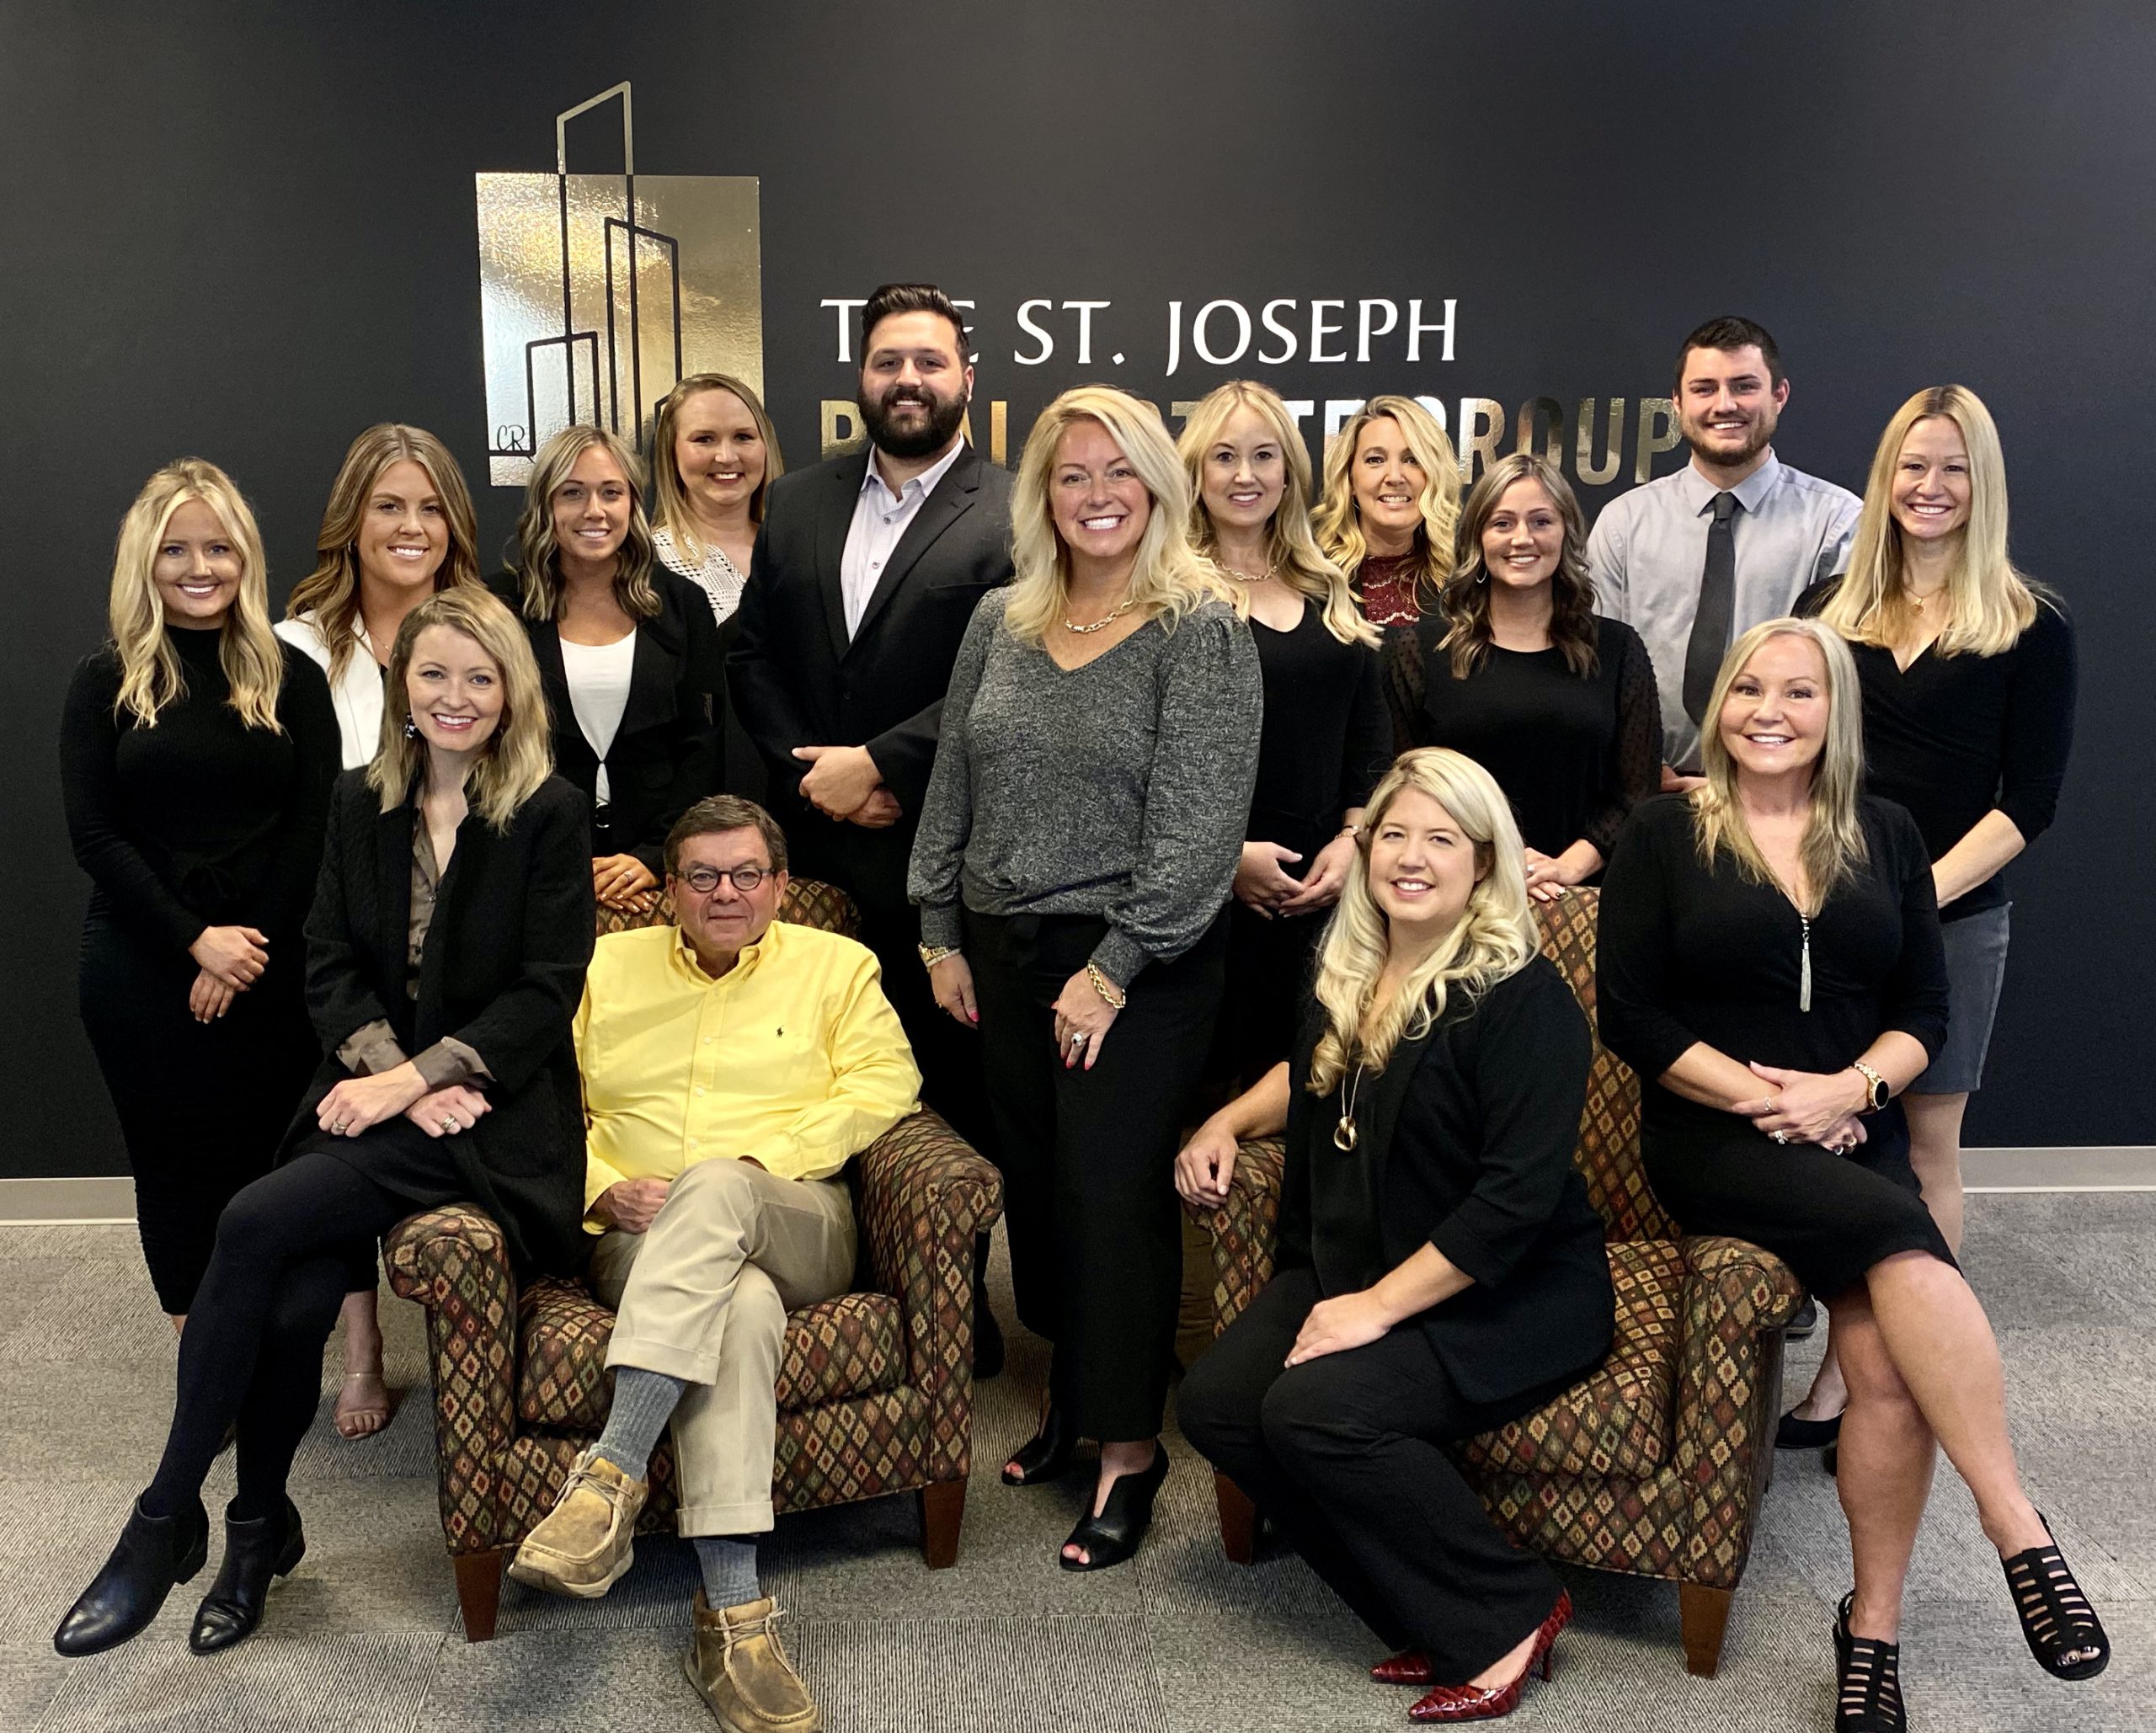 St. Joseph Real estate agents